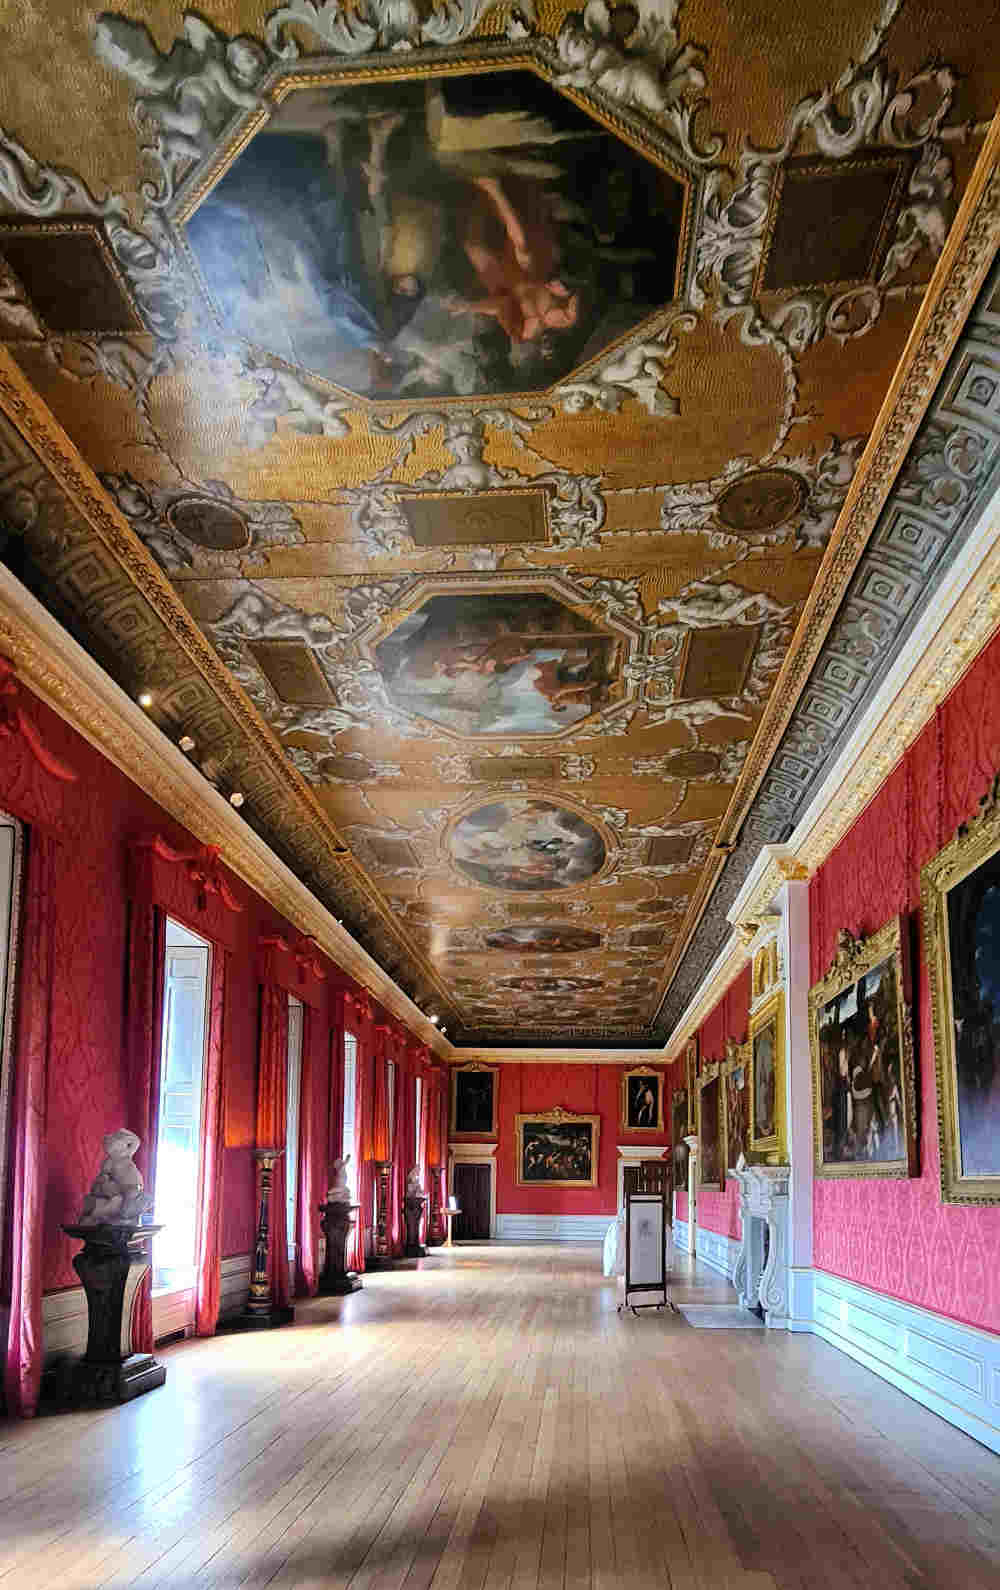 Visit Kensington Palace